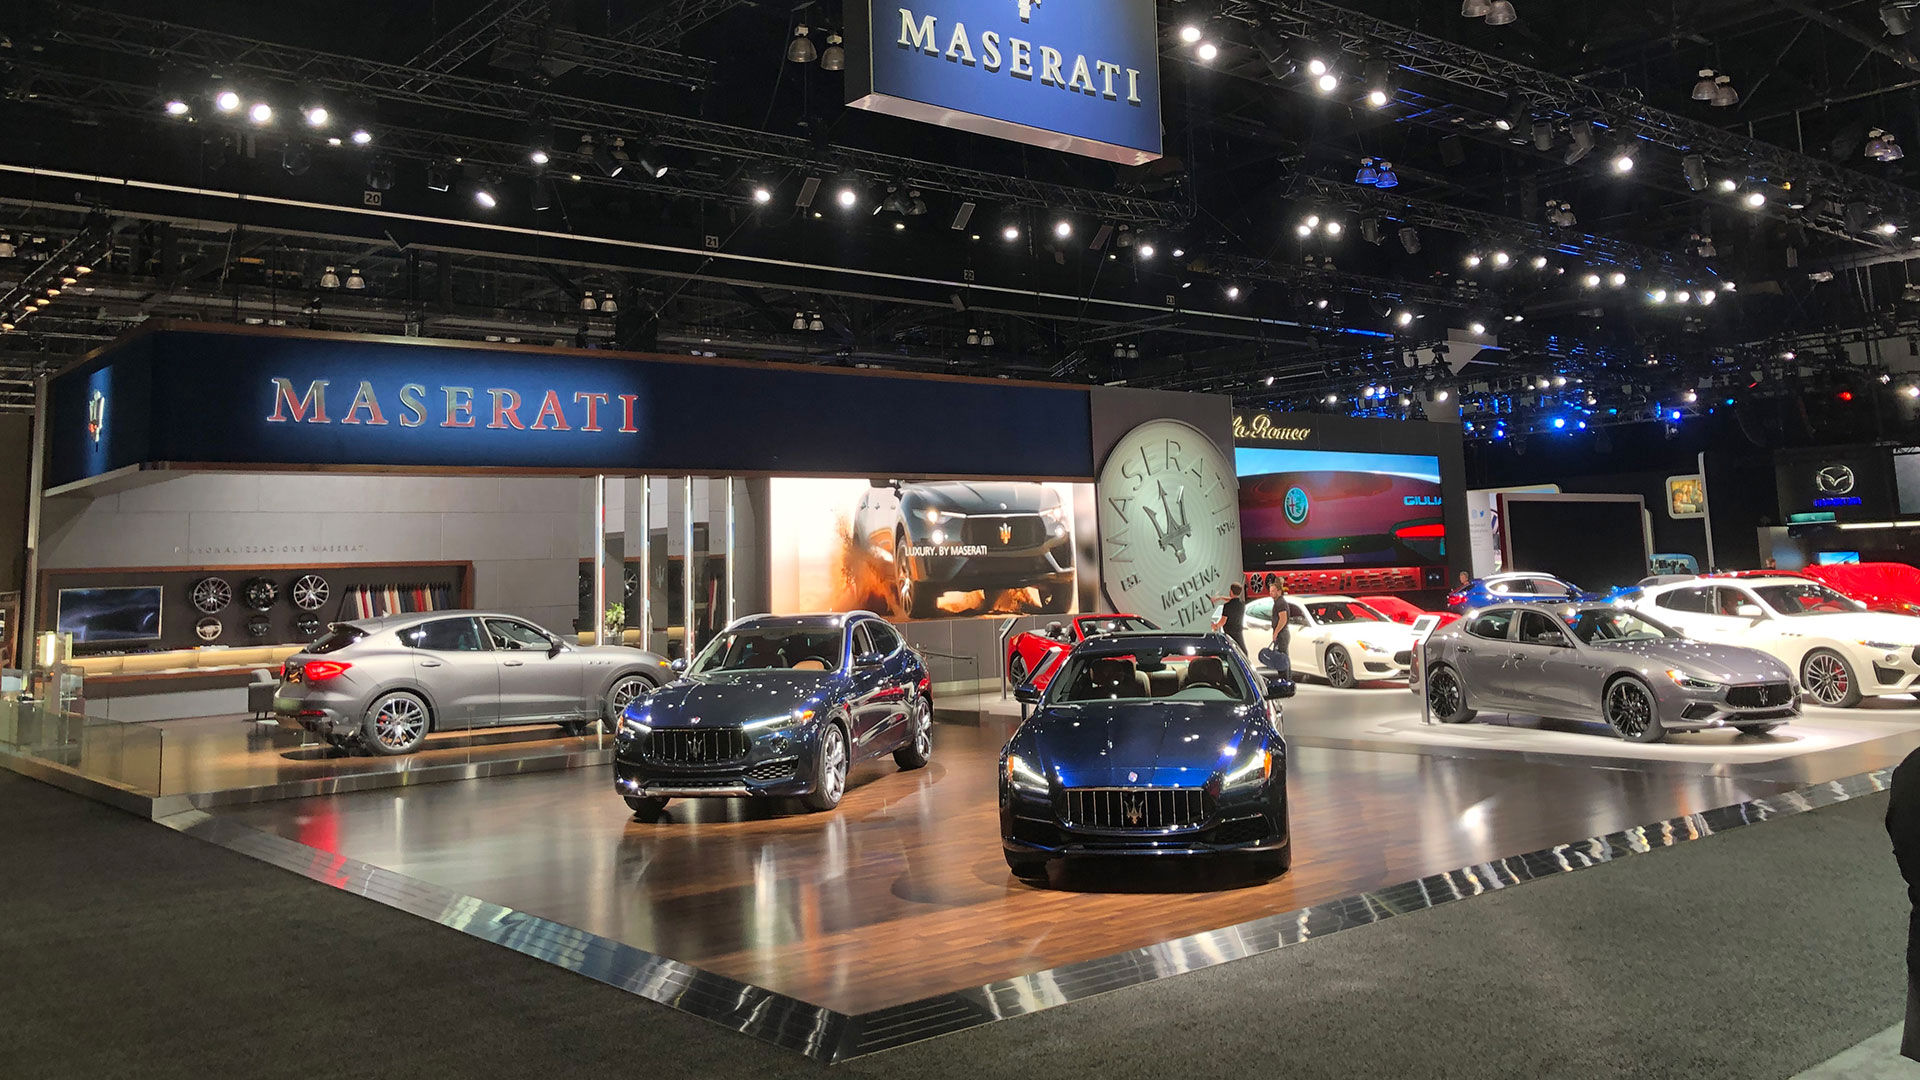 All Maserati models displayed at Los Angeles Auto Show 2019